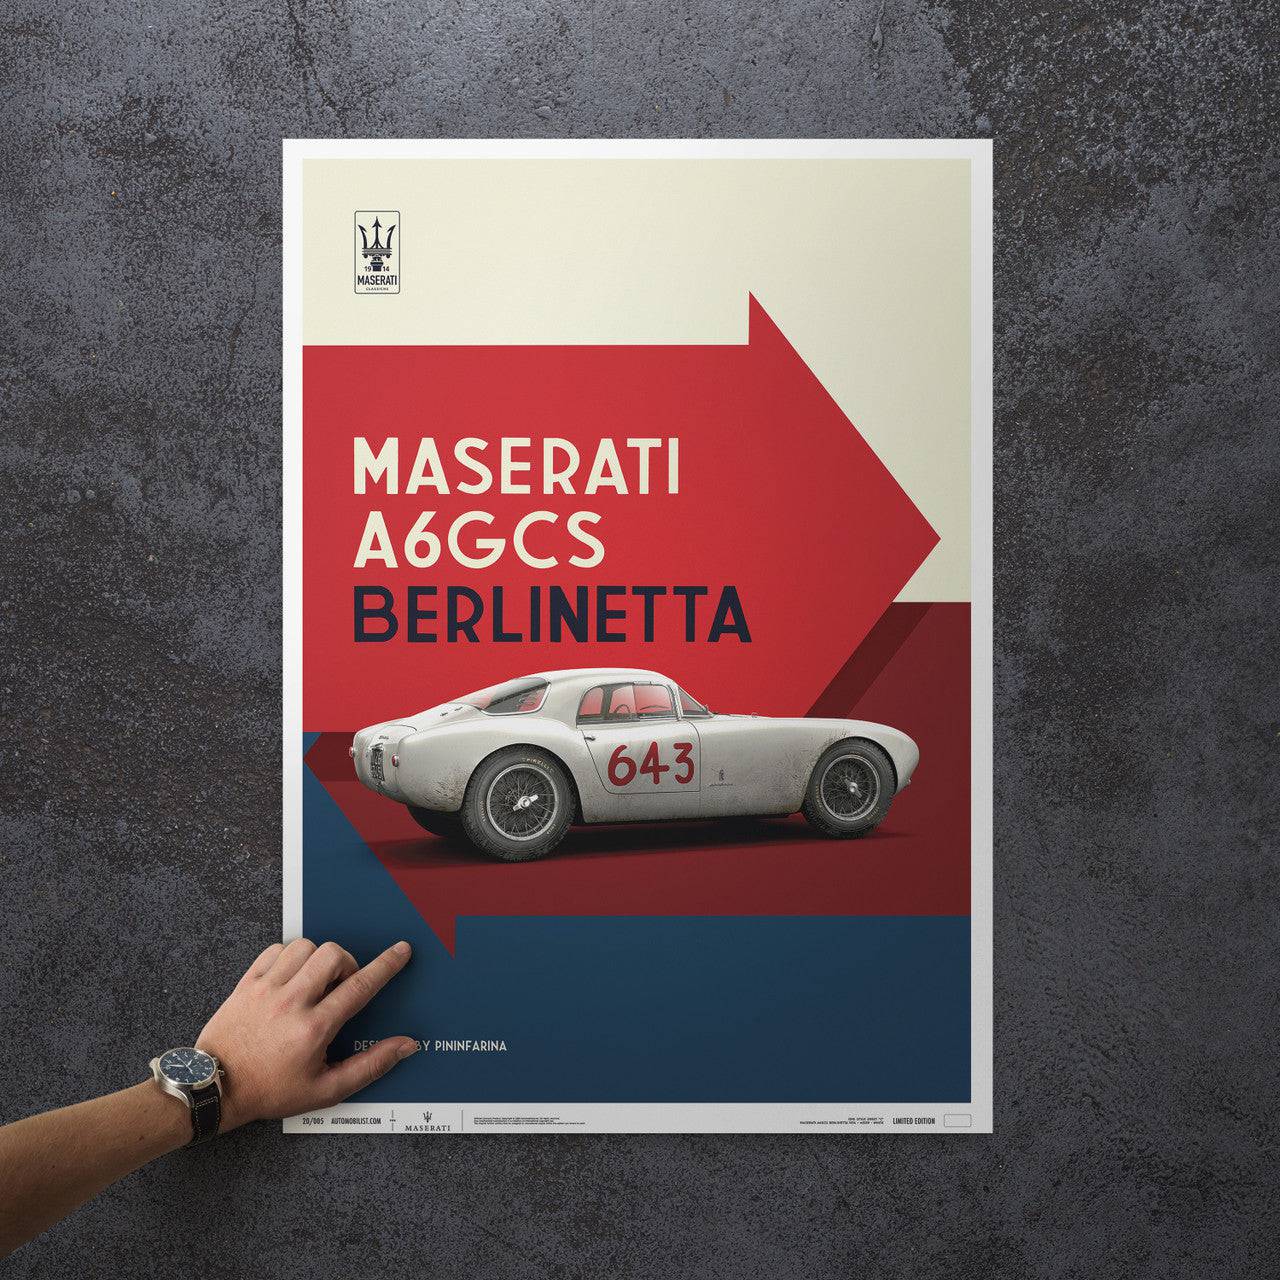 Maserati A6GCS Berlinetta - 1954 - White | Limited Edition